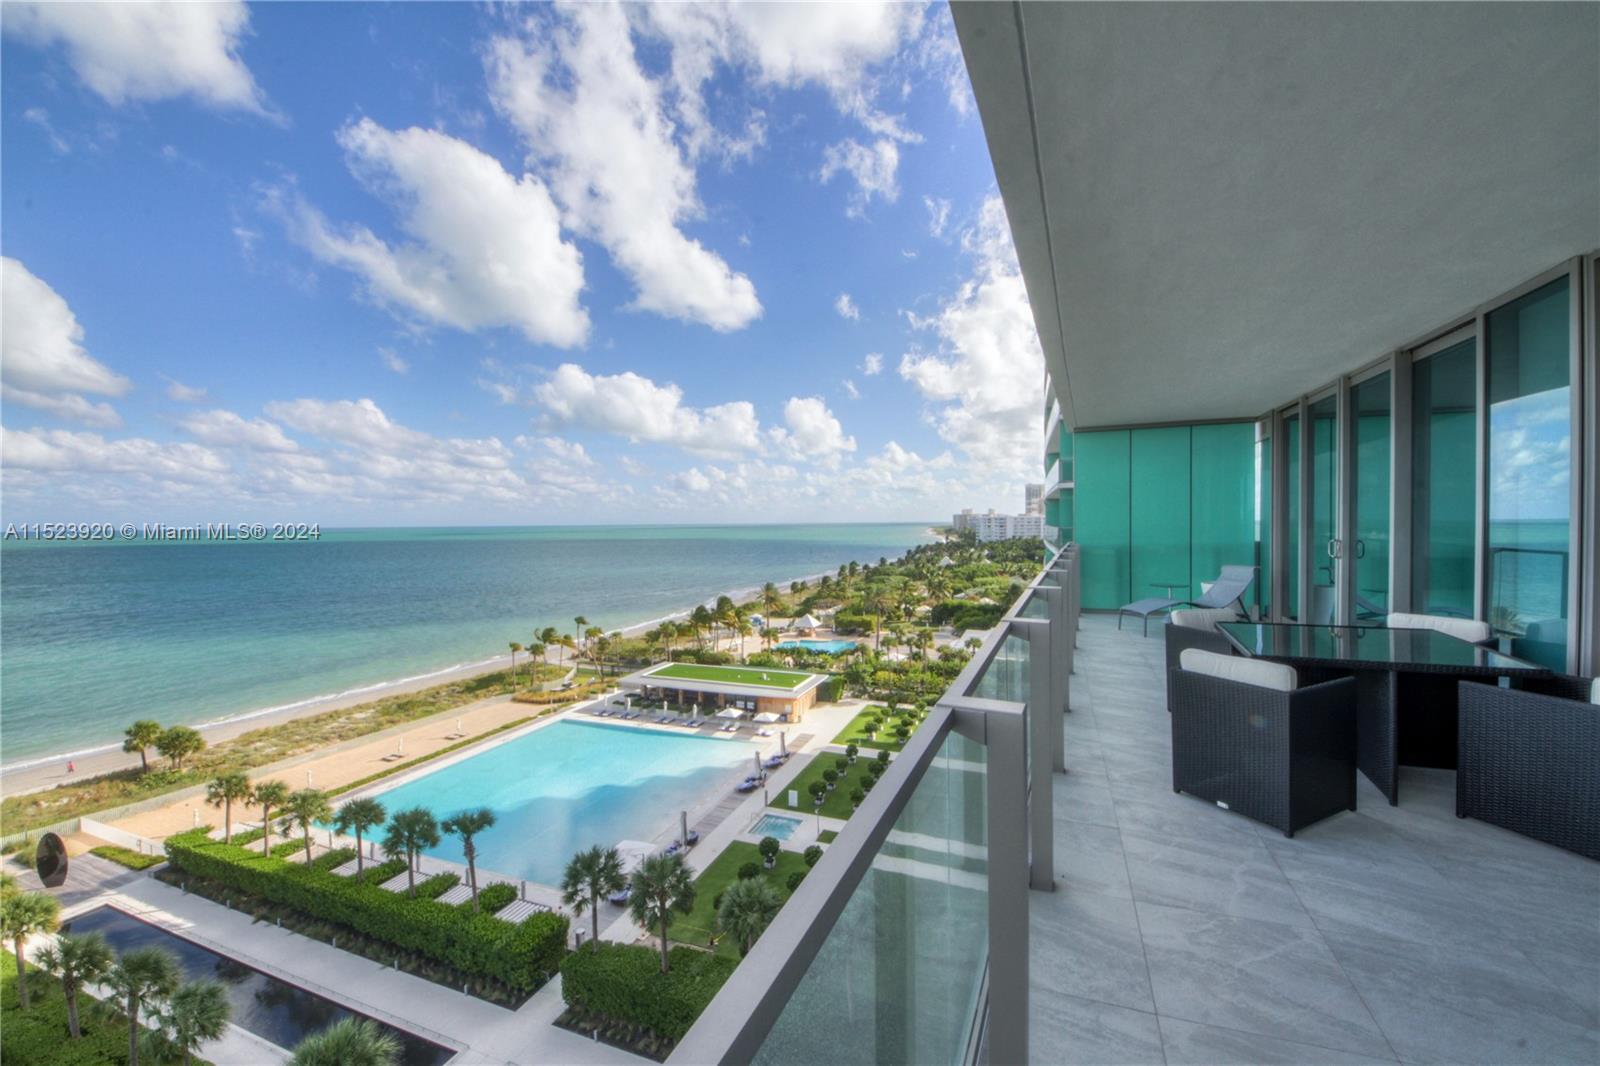 Rental Property at 350 Ocean Dr 904N, Key Biscayne, Miami-Dade County, Florida - Bedrooms: 2 
Bathrooms: 4  - $25,000 MO.